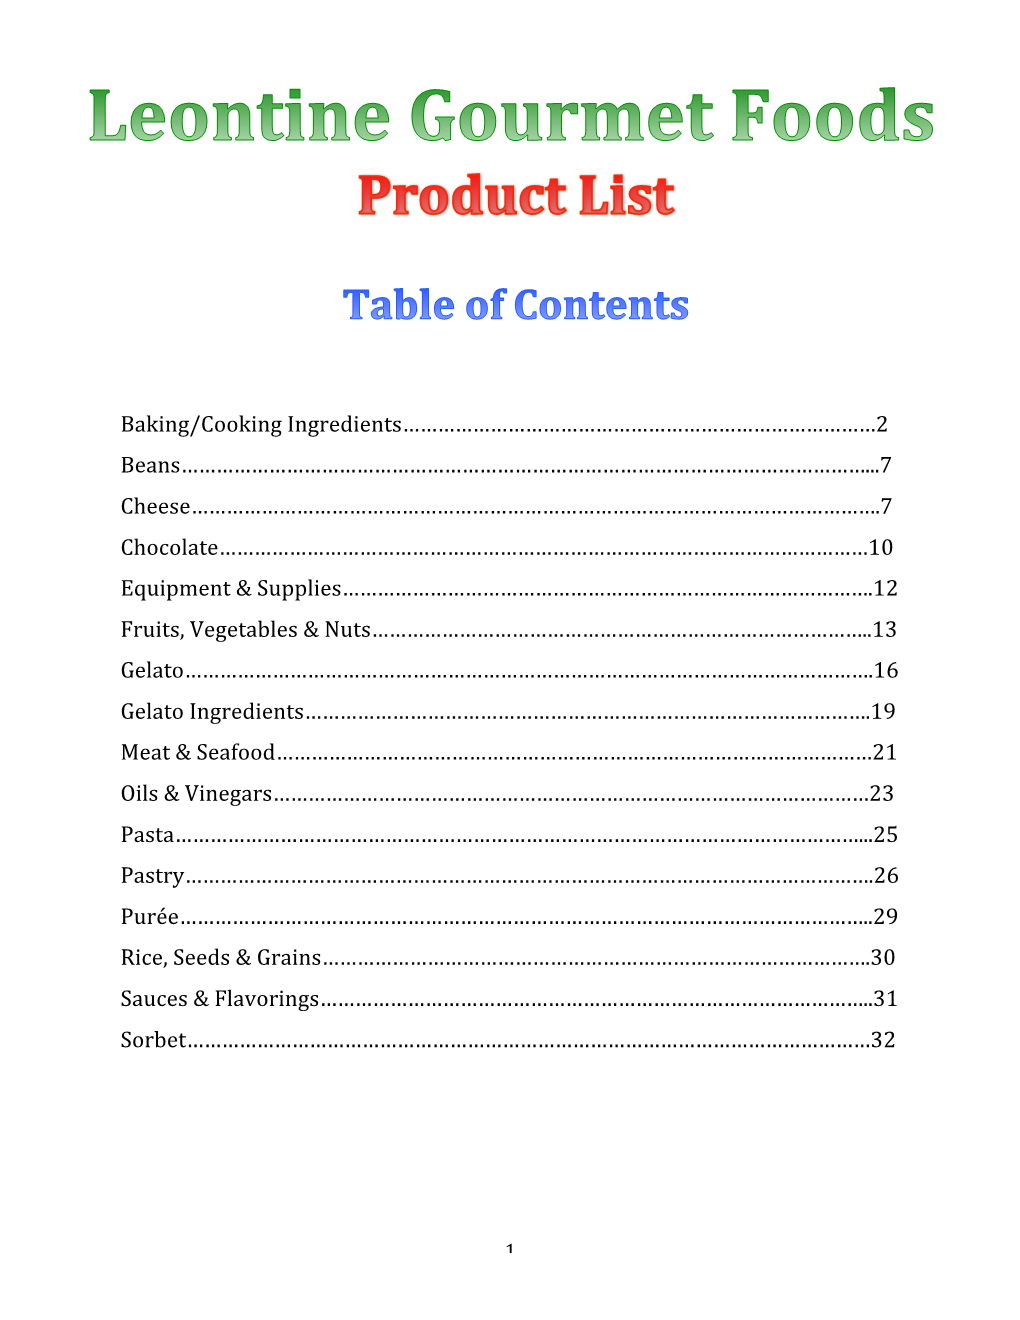 Leontine Gourmet Foods Product List